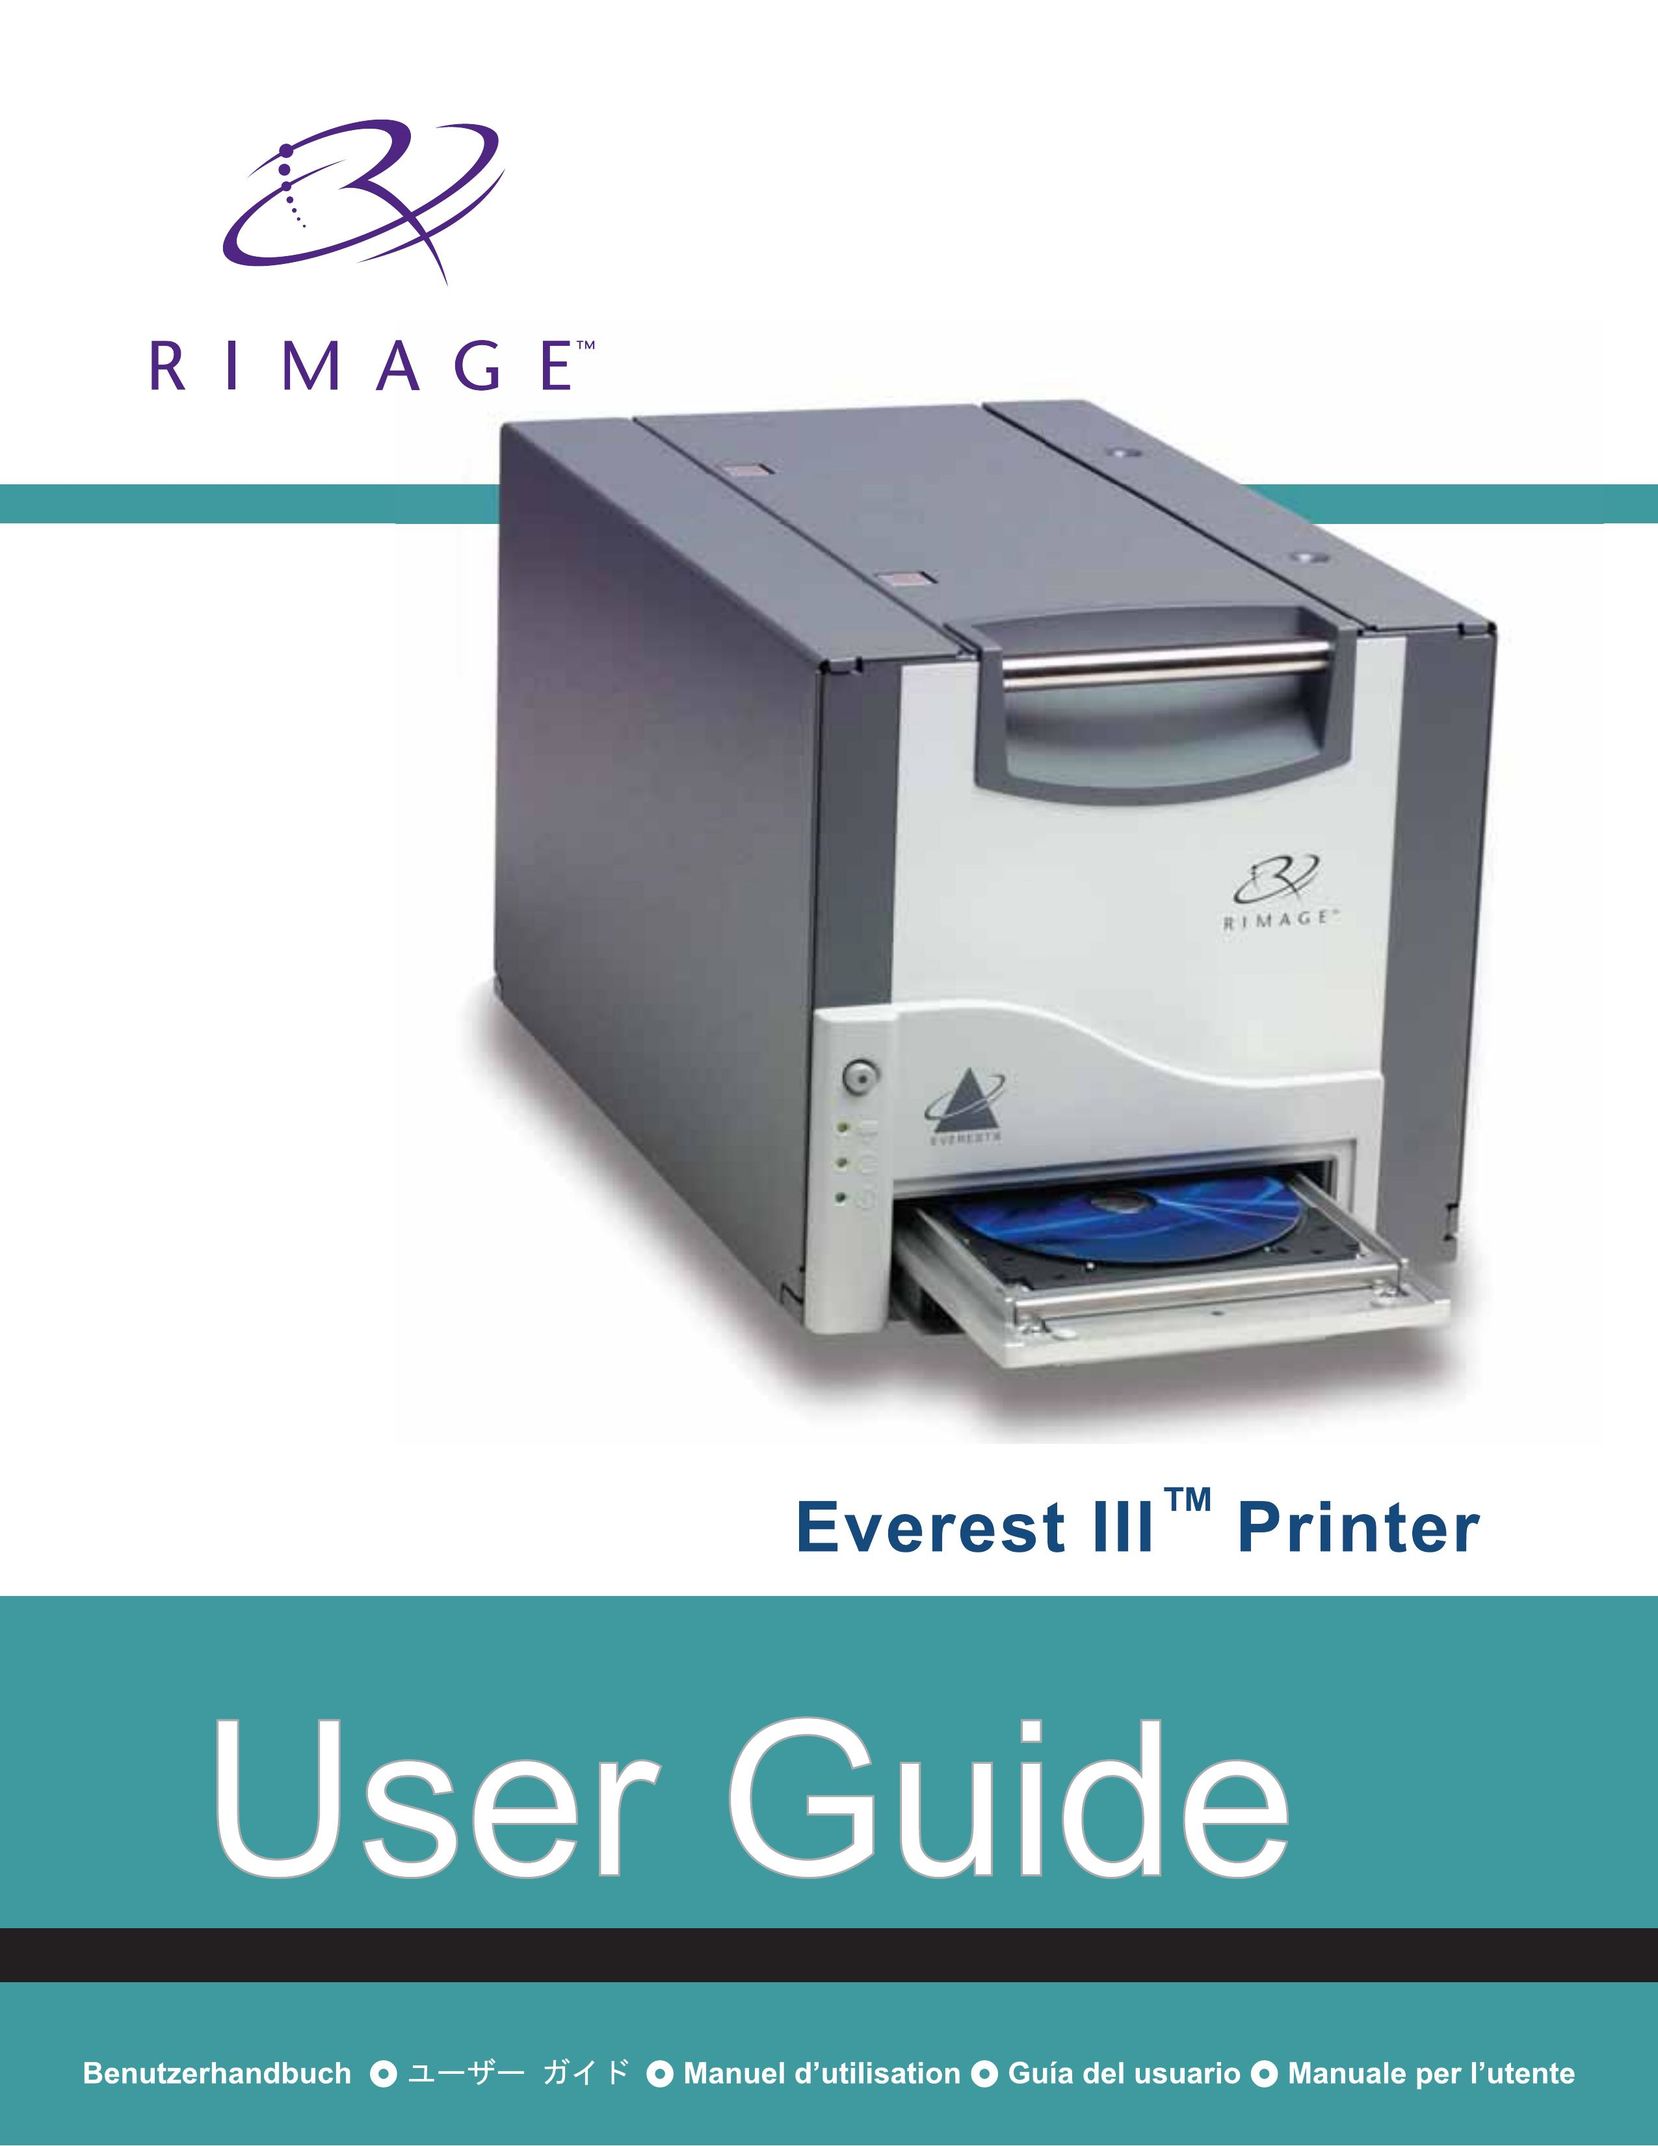 Rimage Everest III Printer User Manual